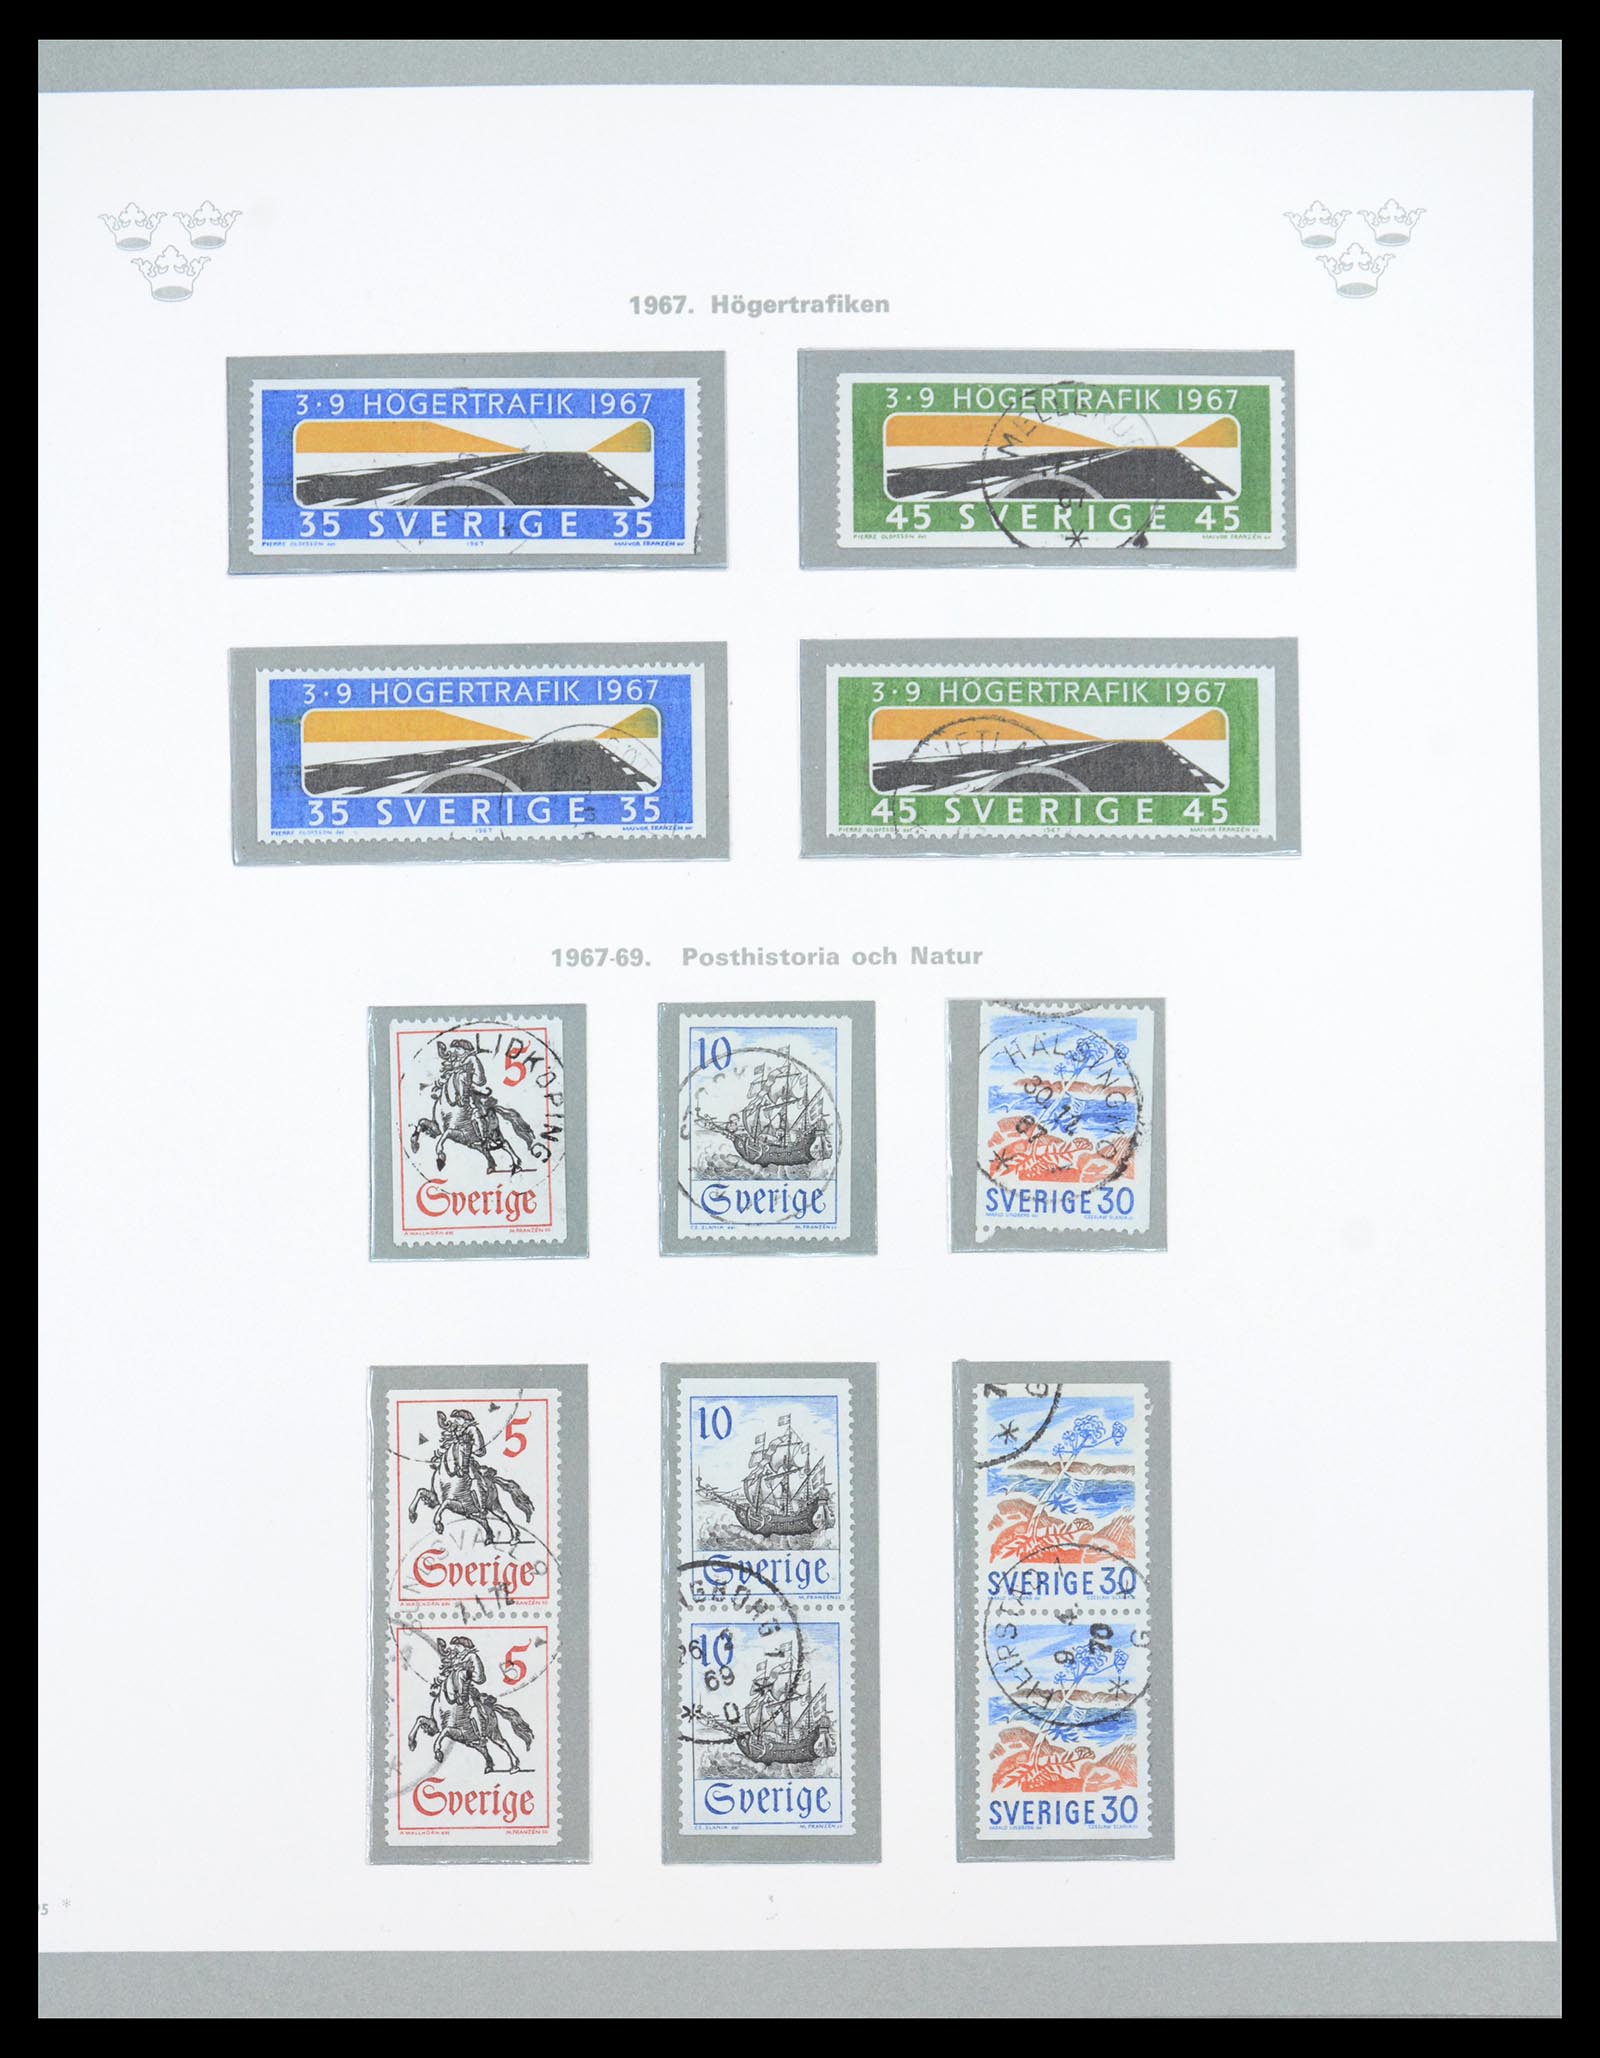 36579 065 - Stamp collection 36579 Zweden complete verzameling 1855-1975.